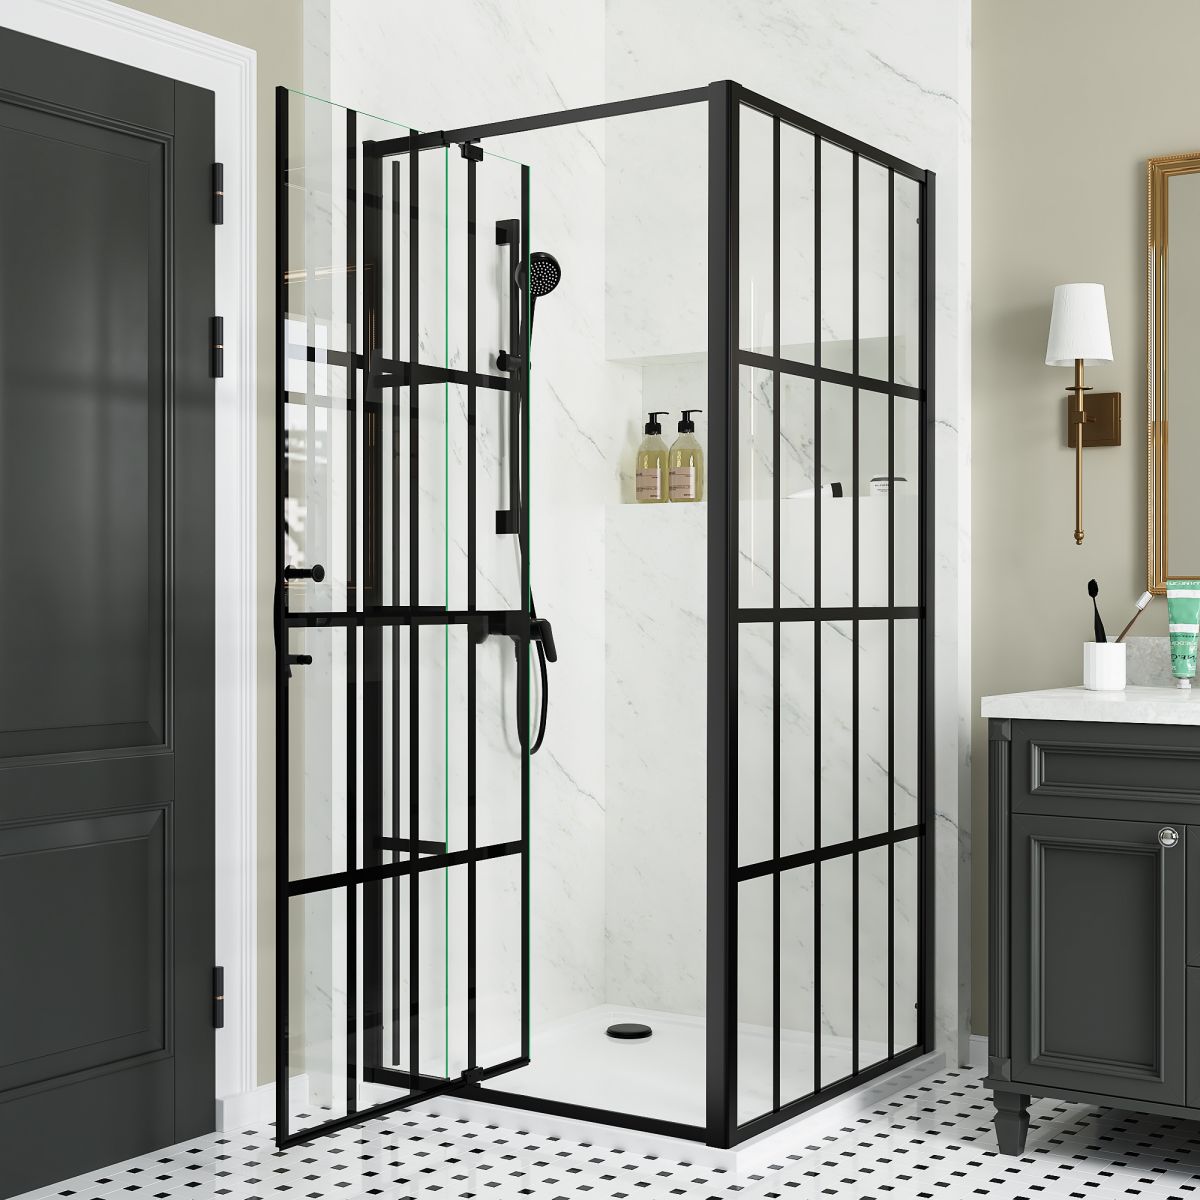 Haven Frameless Shower Door 36 in. W x 72 in. H,Corner Shower Enclosure,6mm Clear Glass,Pivot Shower Doors,Brushed Nickel,Not Shower Base